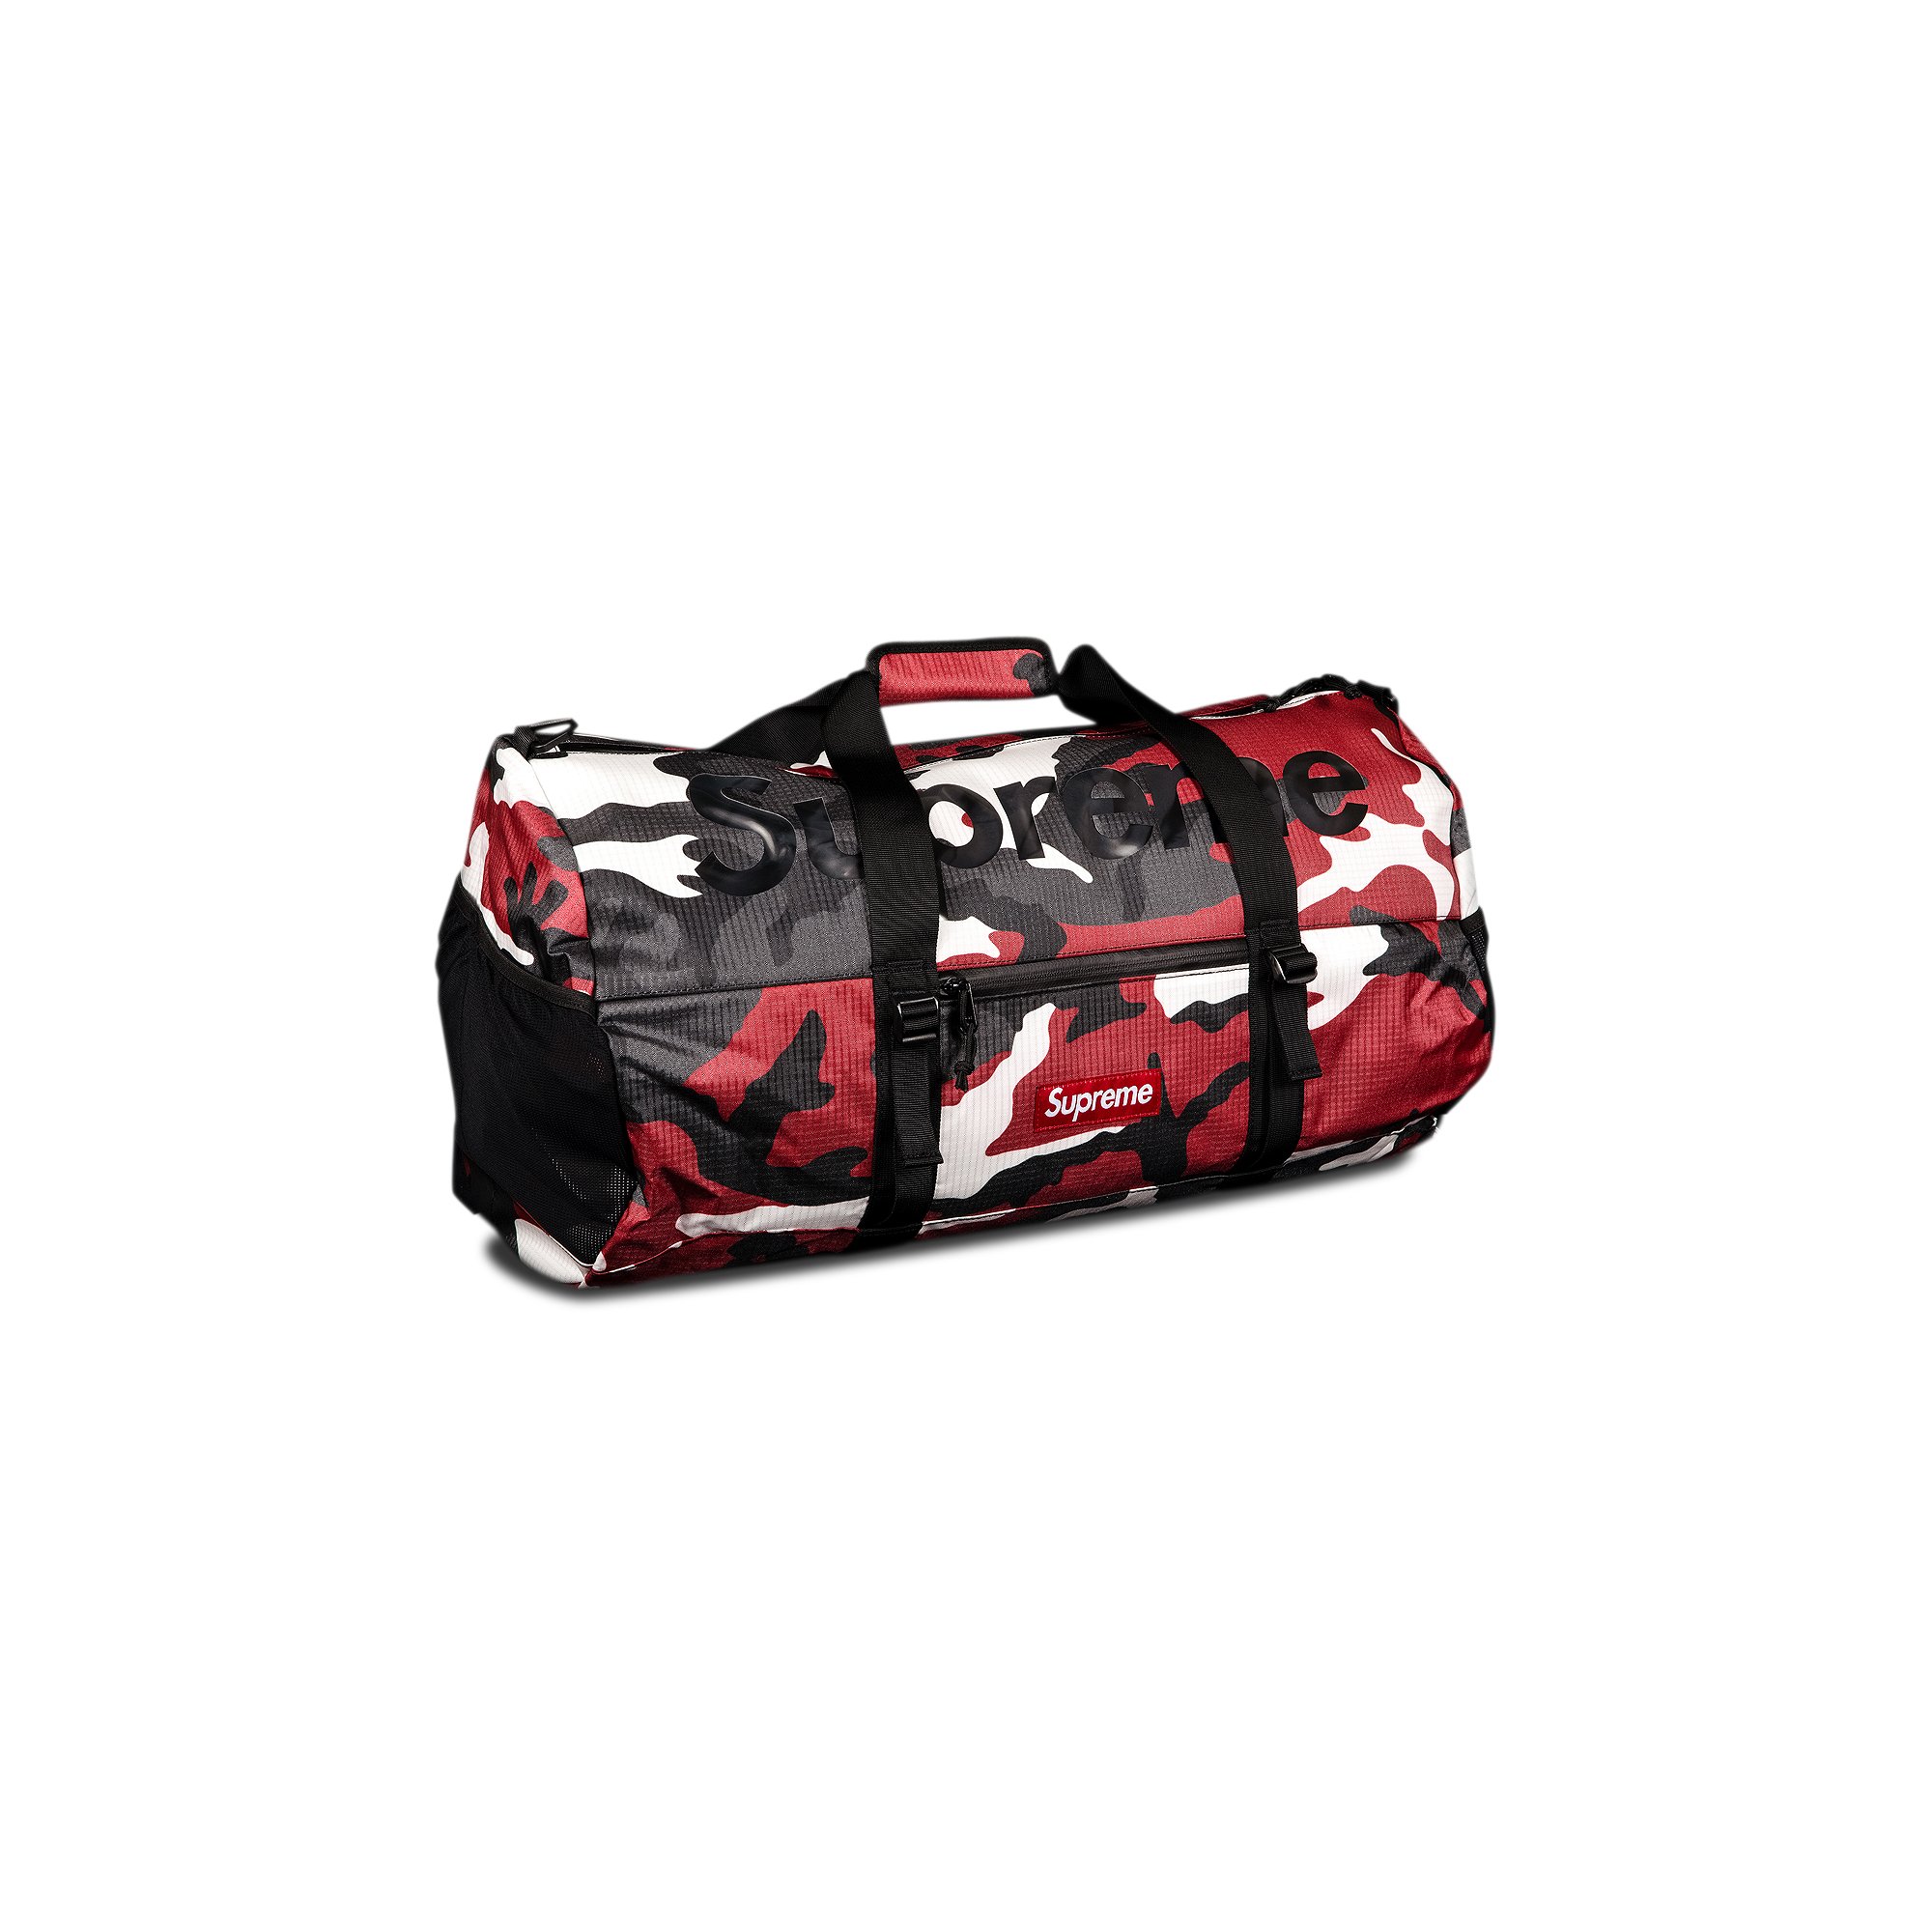 Supreme Duffle Bag 'Red Camo'